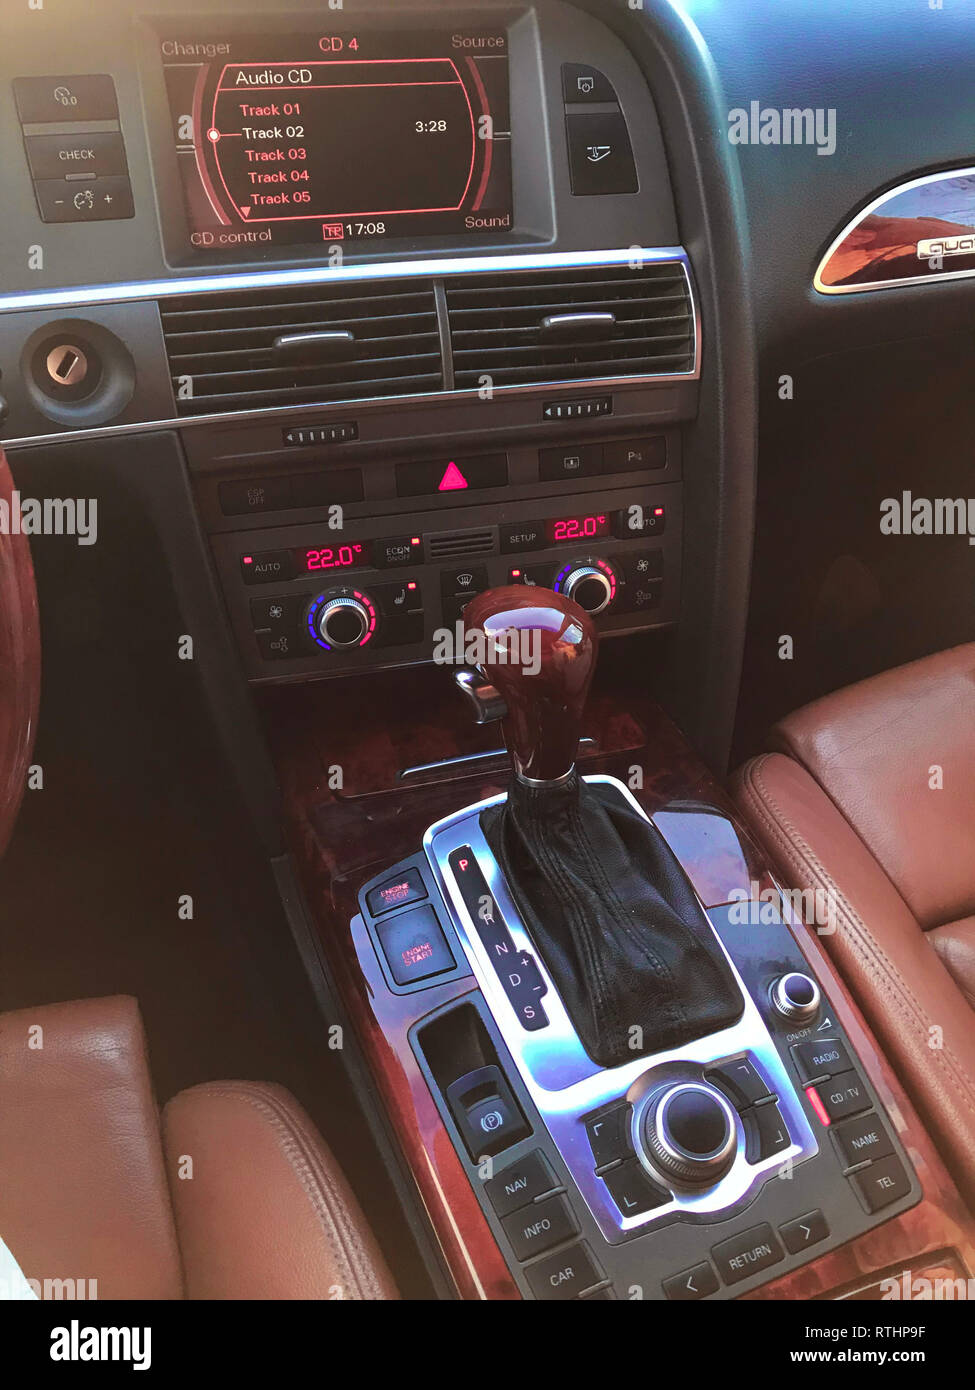 Uxury Car Interior Details Dashboard And Steering Wheel